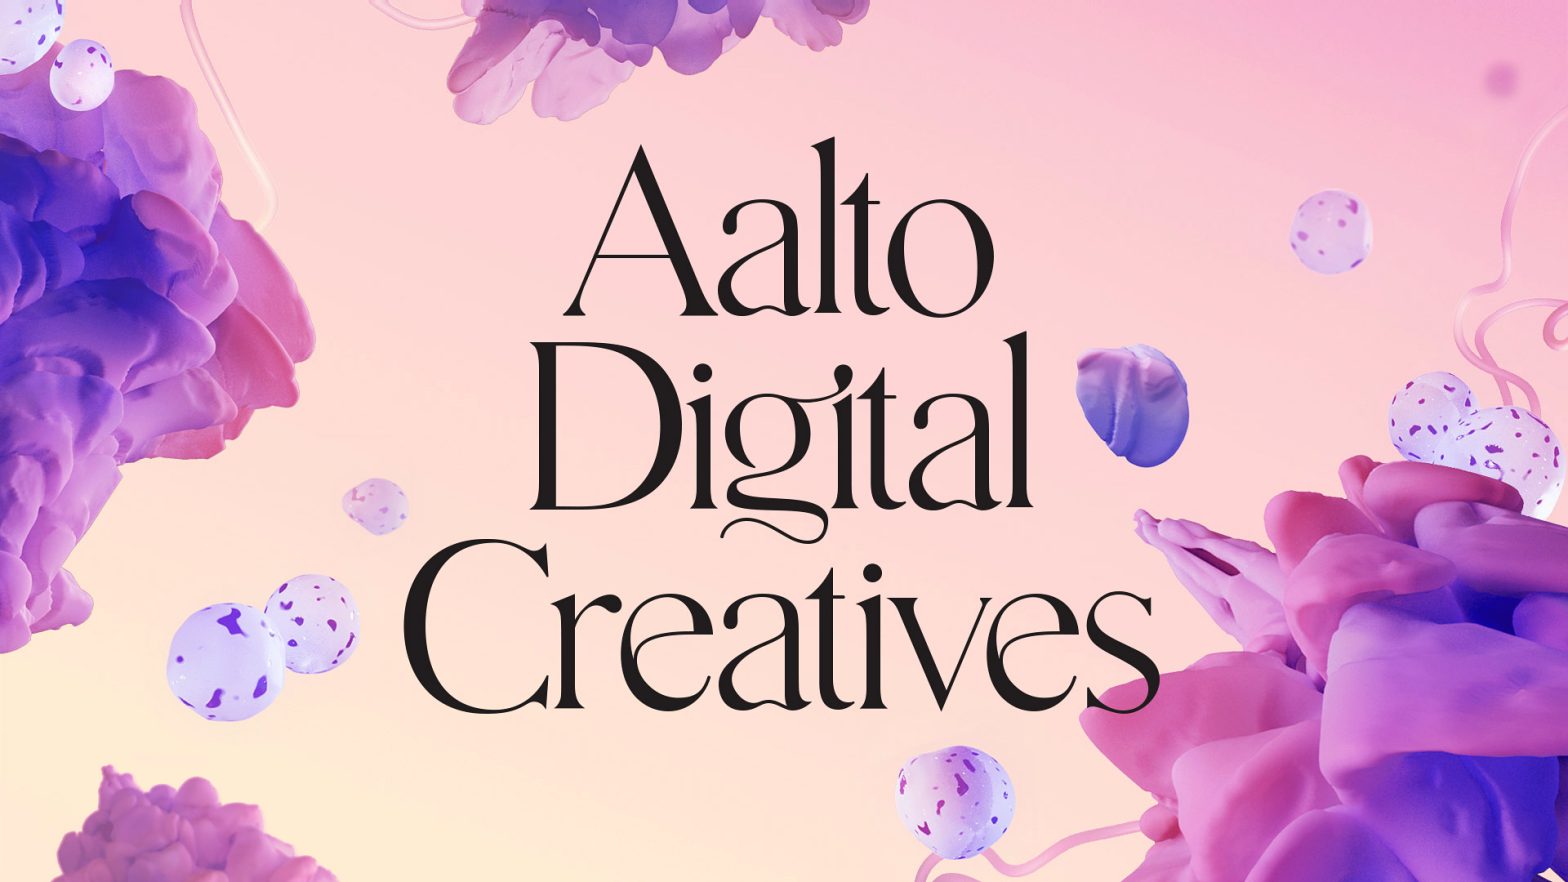 Aalto Digital Creatives main image